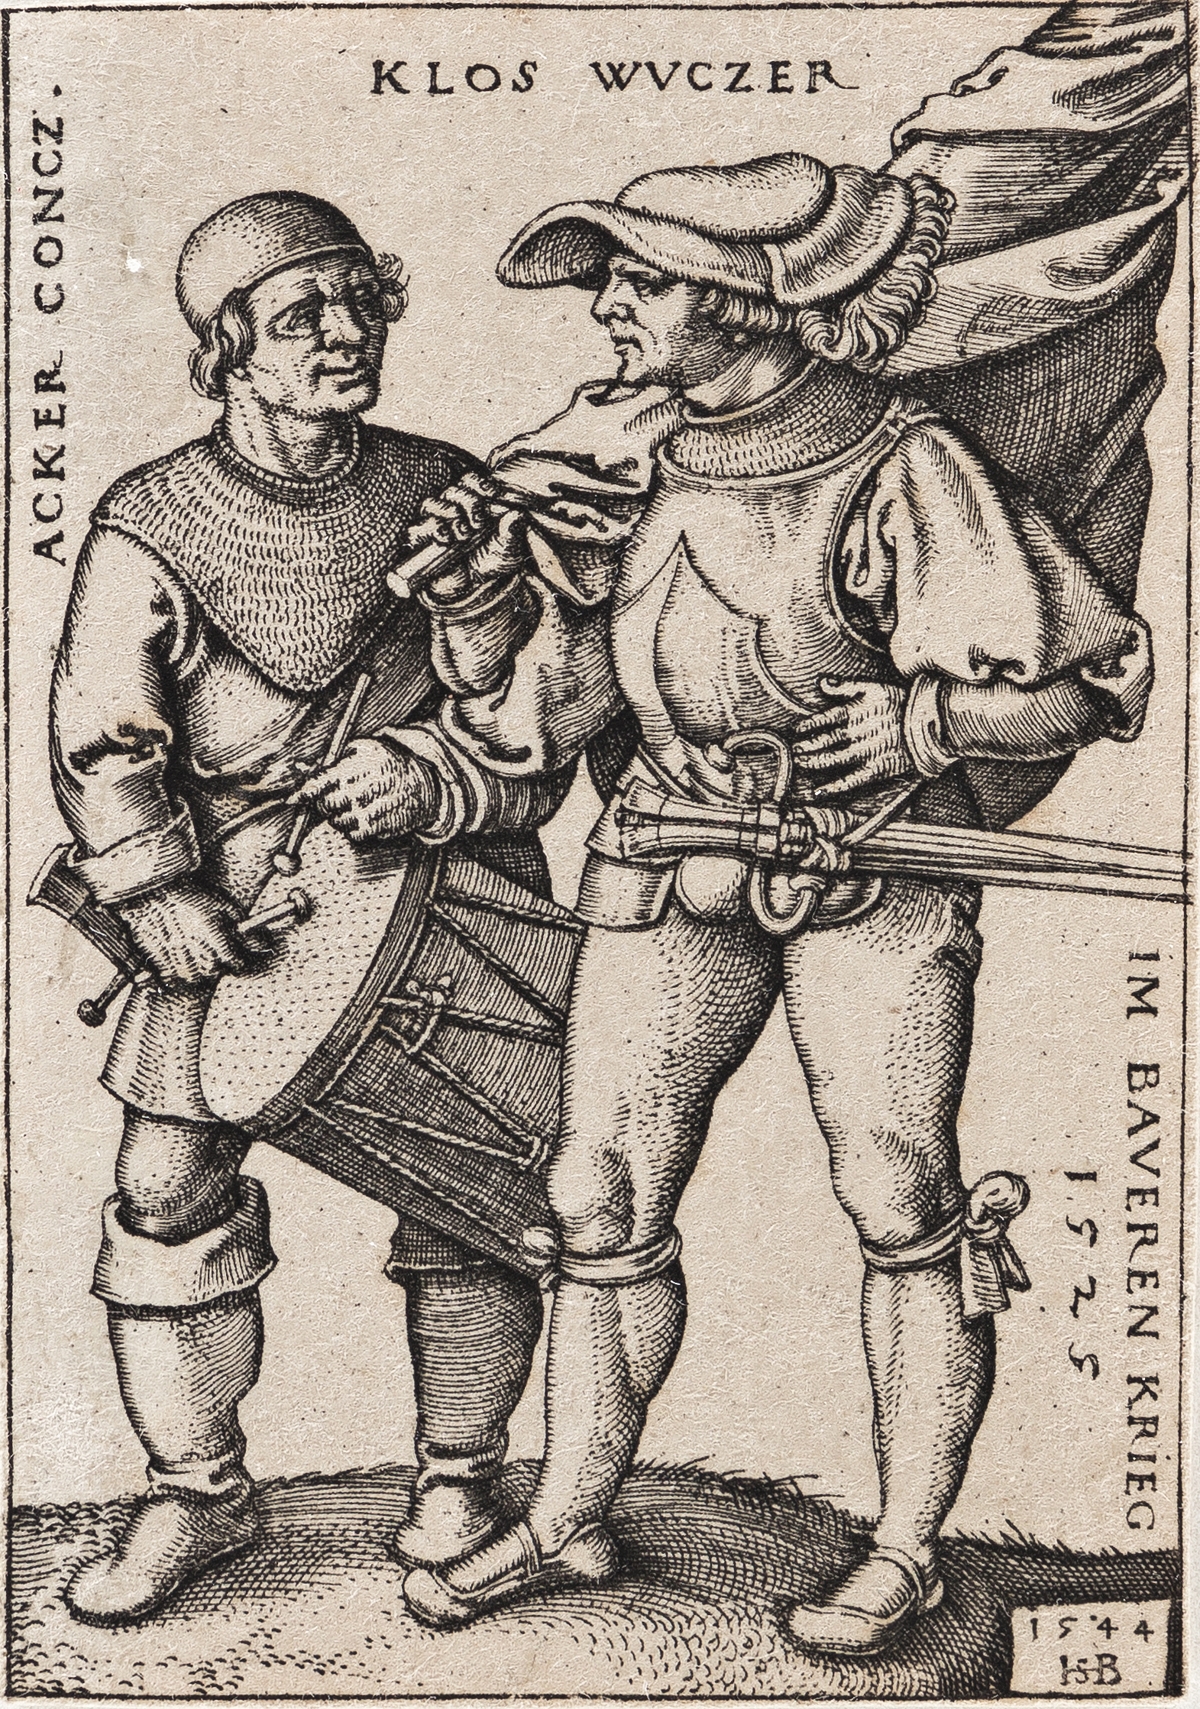 Standard-Bearer and Drummer by Hans Sebald Beham, 1524-1525